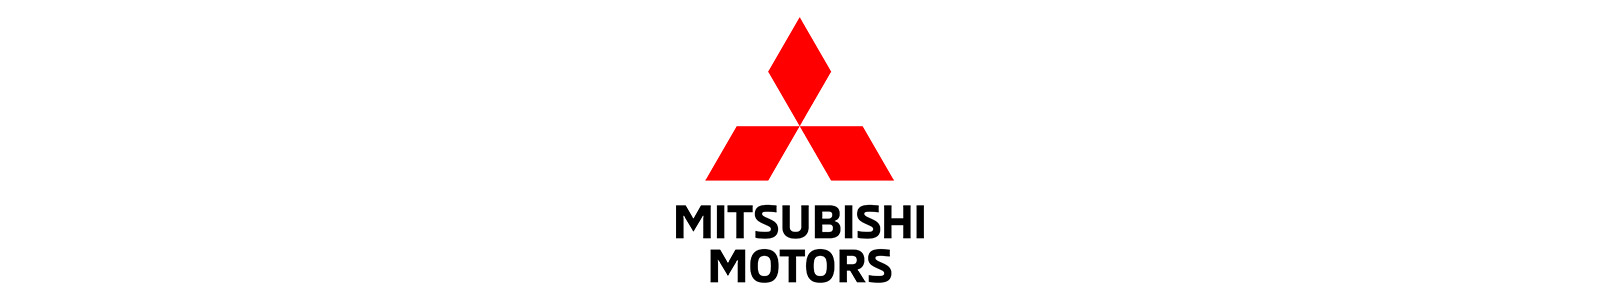 mitsubishi-banner